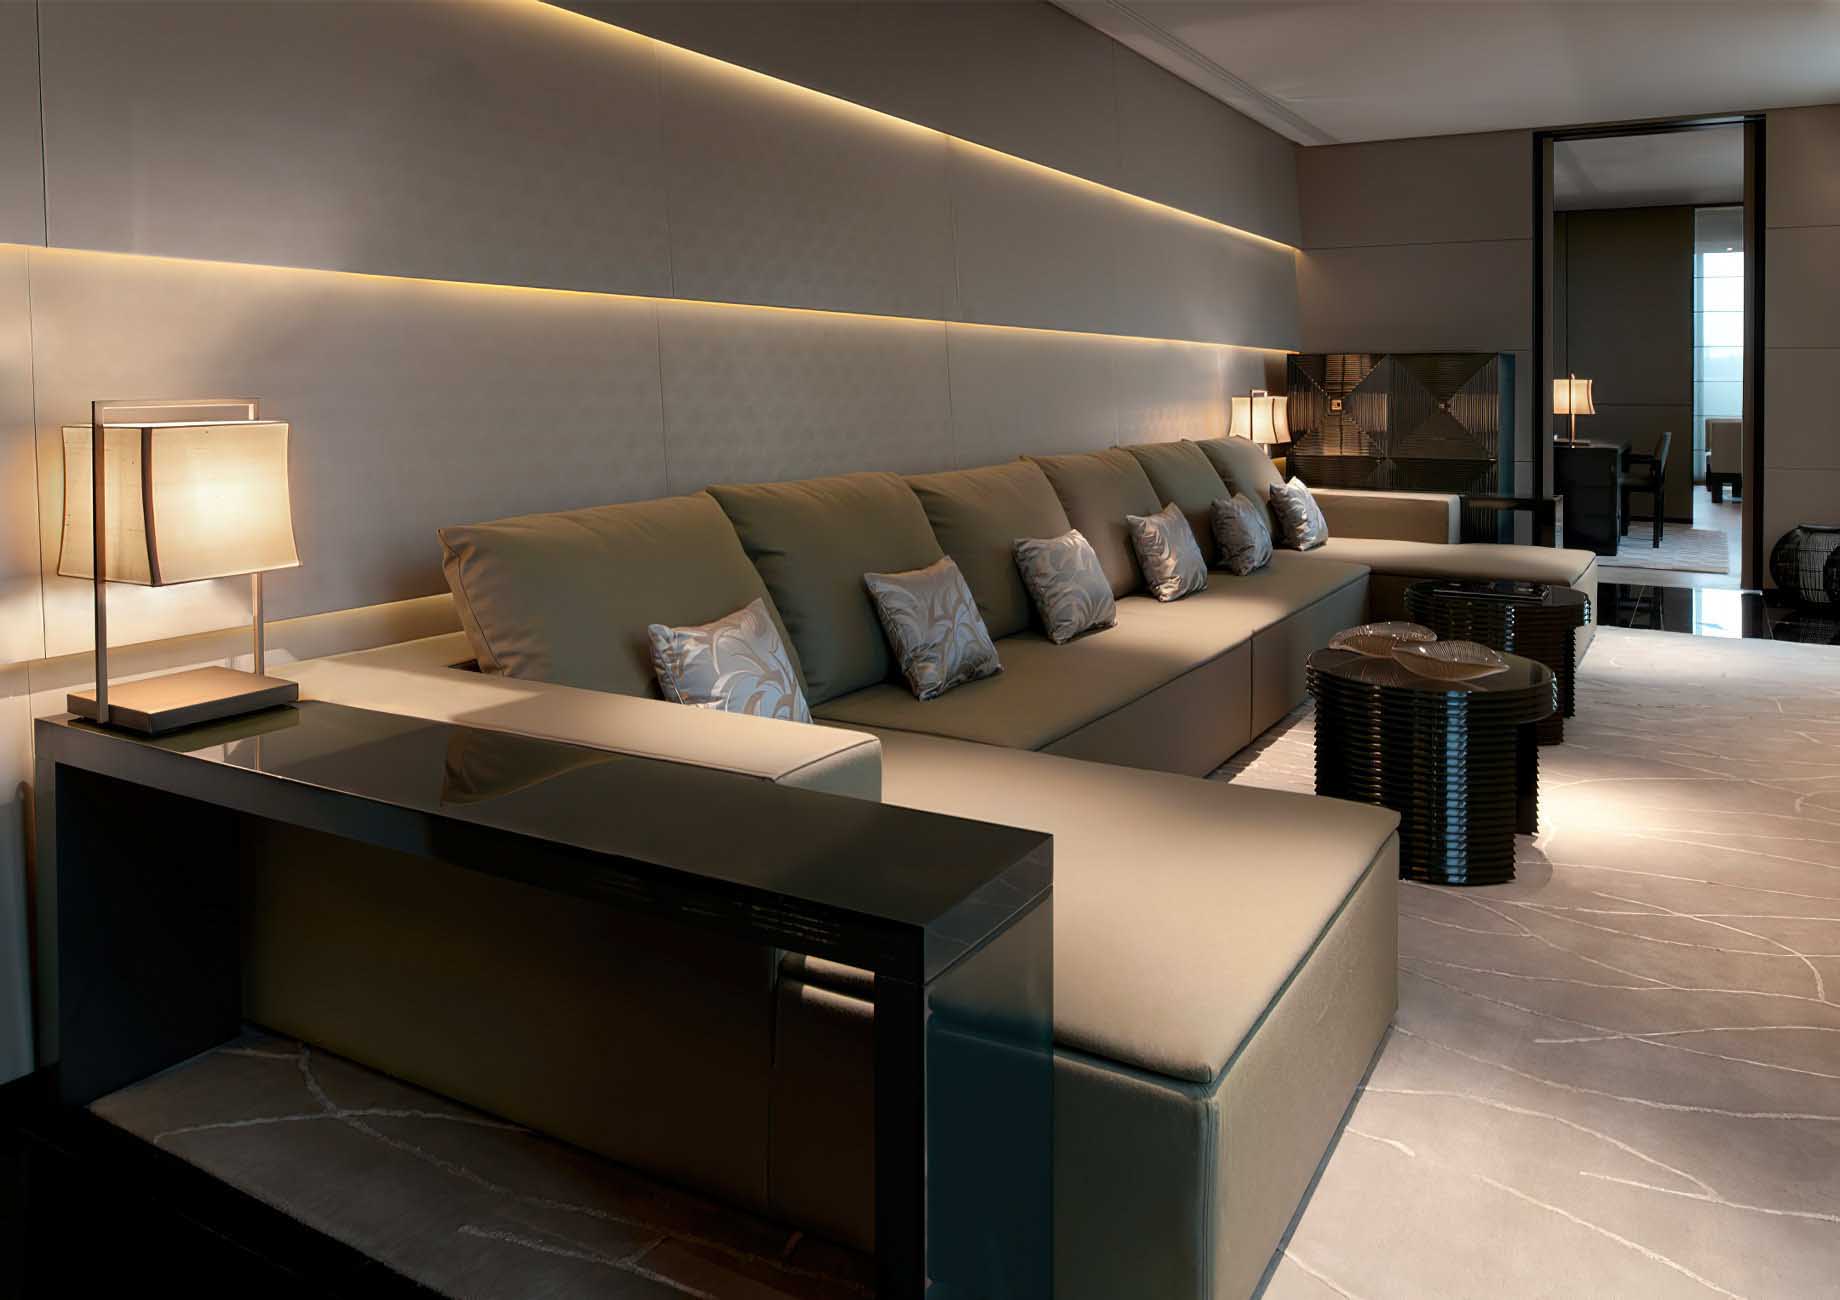 052 – Armani Hotel Milano – Milan, Italy – Armani Suite Living Room